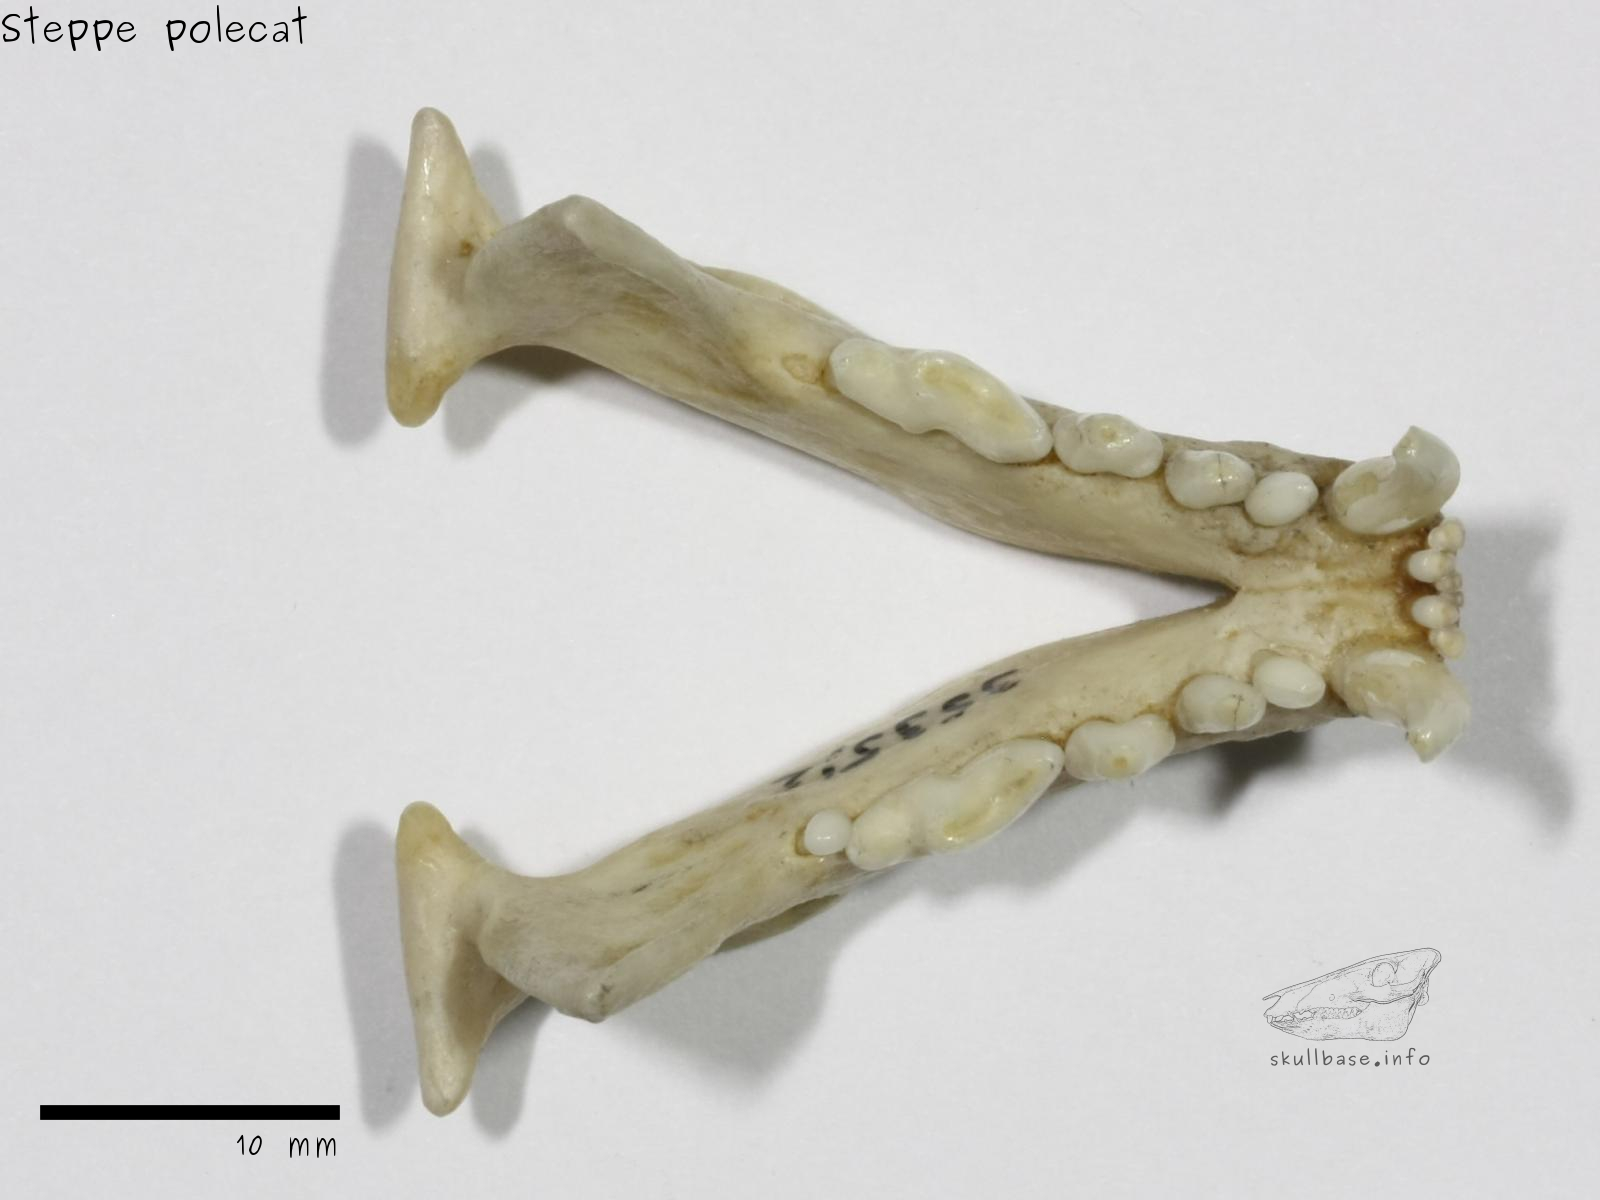 Steppe polecat (Mustela eversmanii) jaw